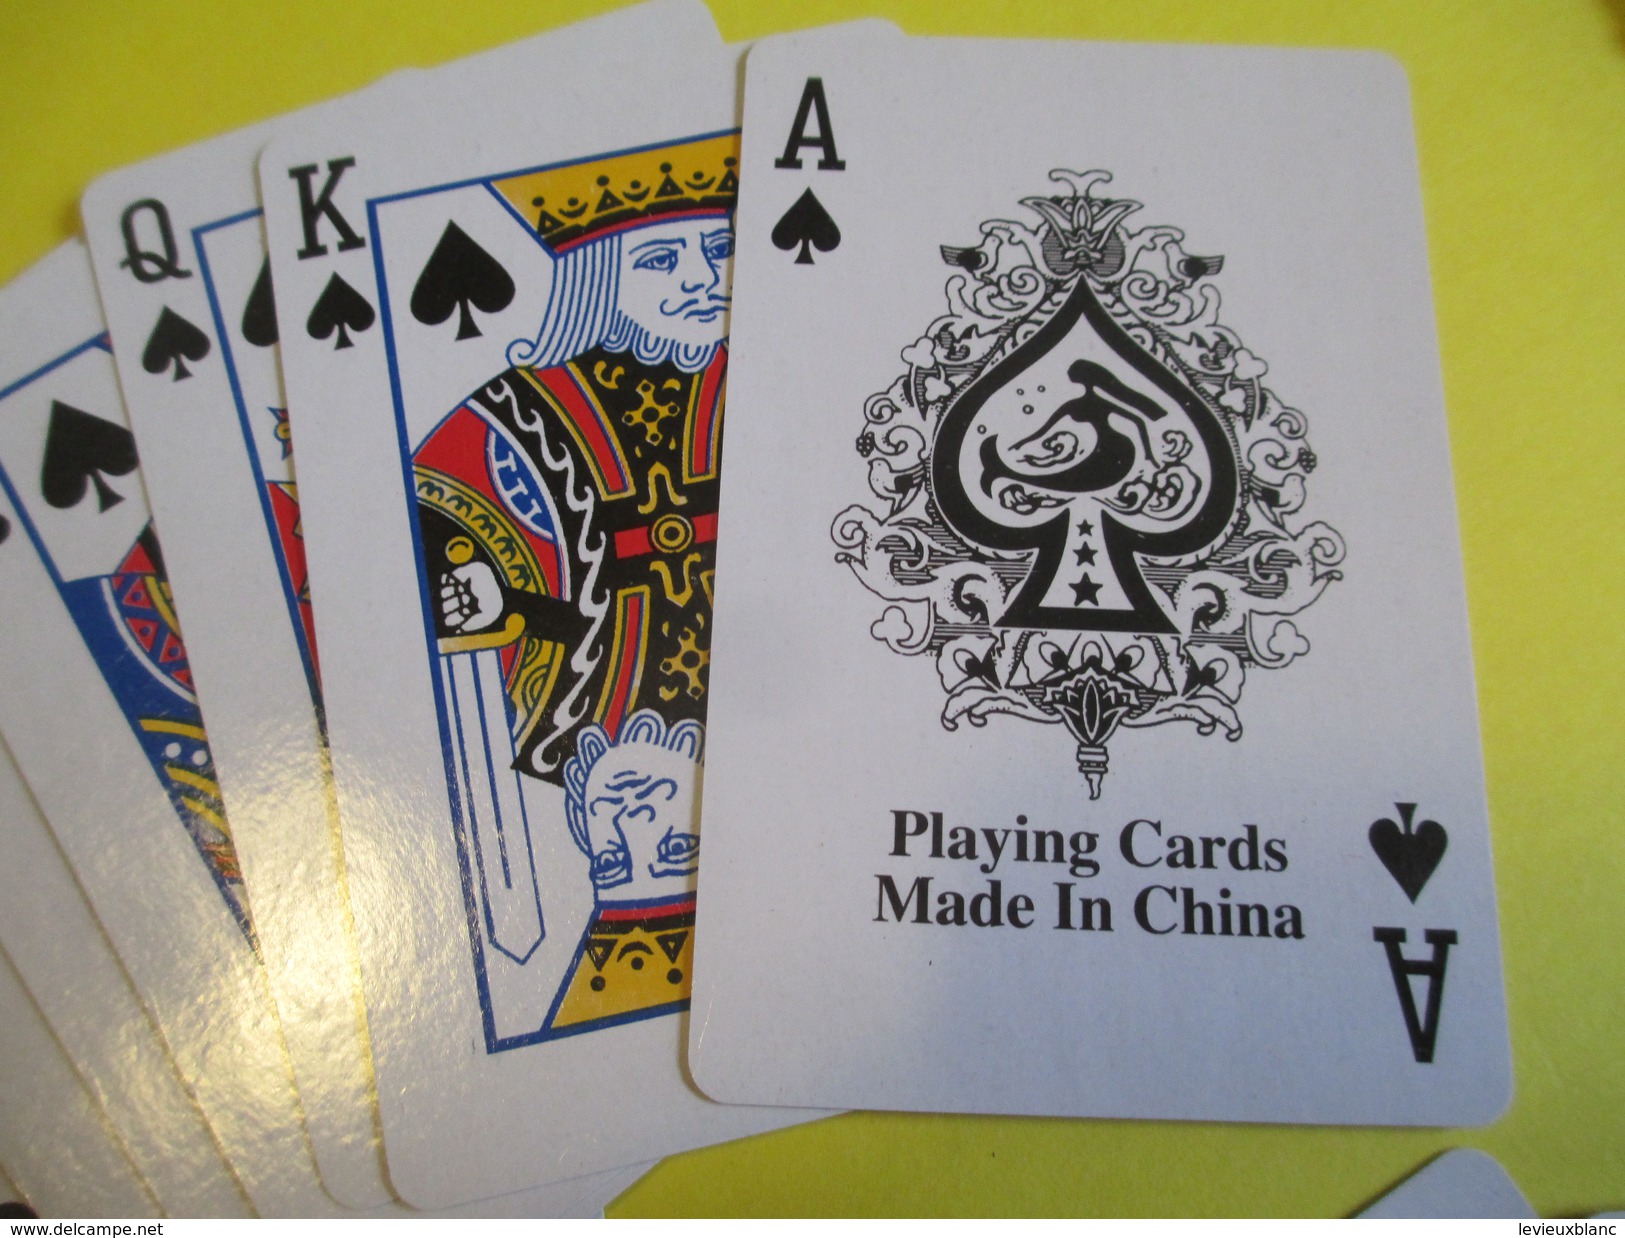 Jeux de 54 cartes /Publicitaire/Cartes glacées/ IBIS Accor Hotels / Made in CHINA/vers 2000        CAJ22